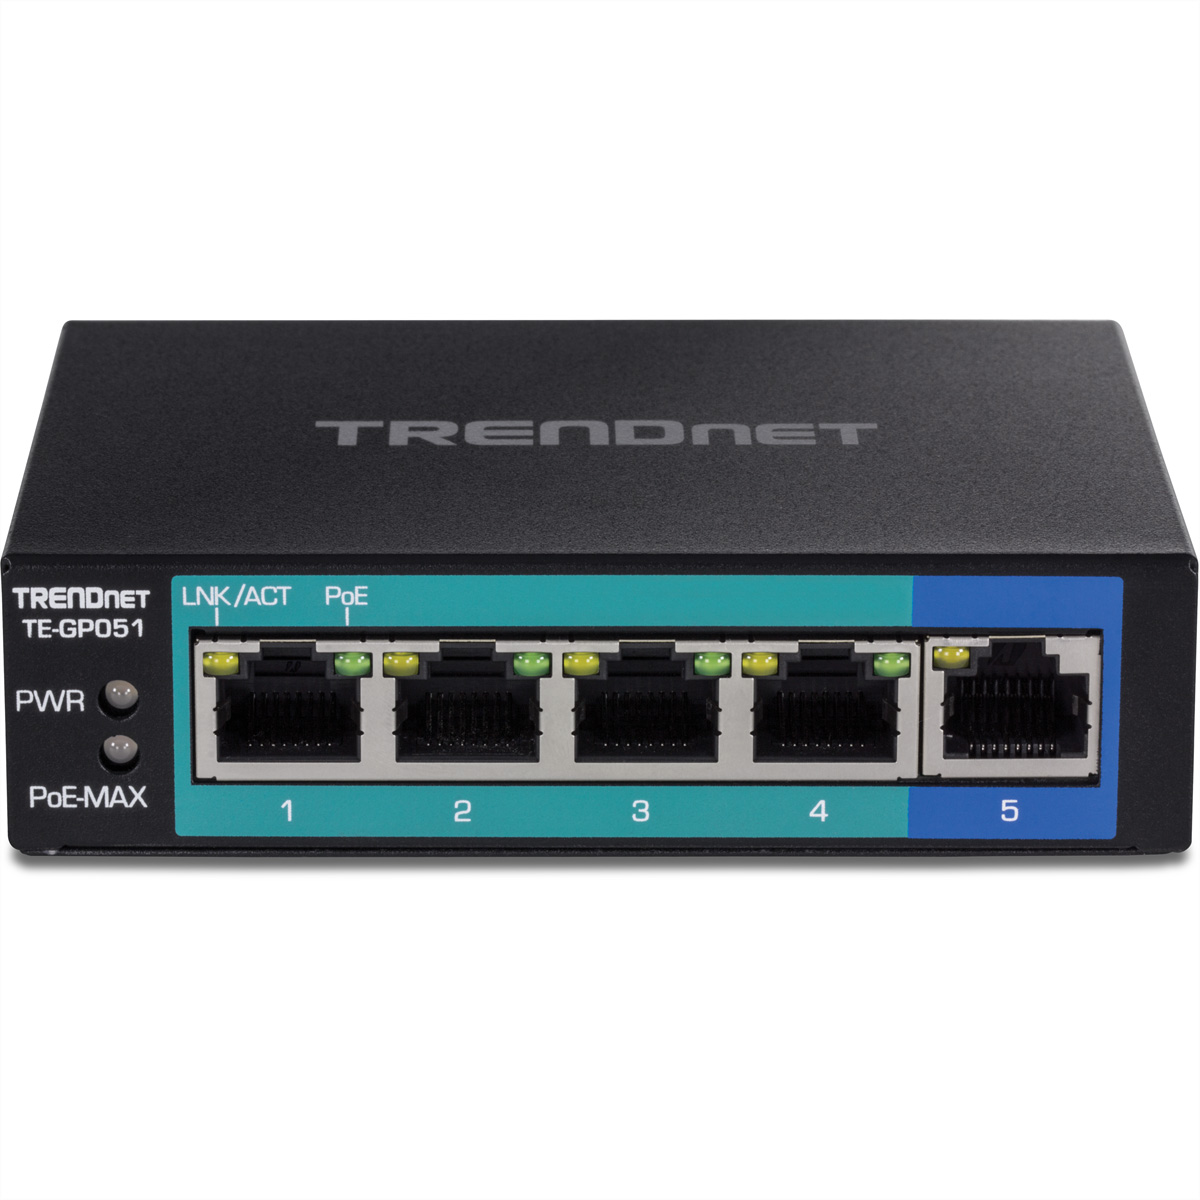 TRENDNET TE-GP051 5-Port PoE+ Gigabit Gigabit Switch PoE Switch